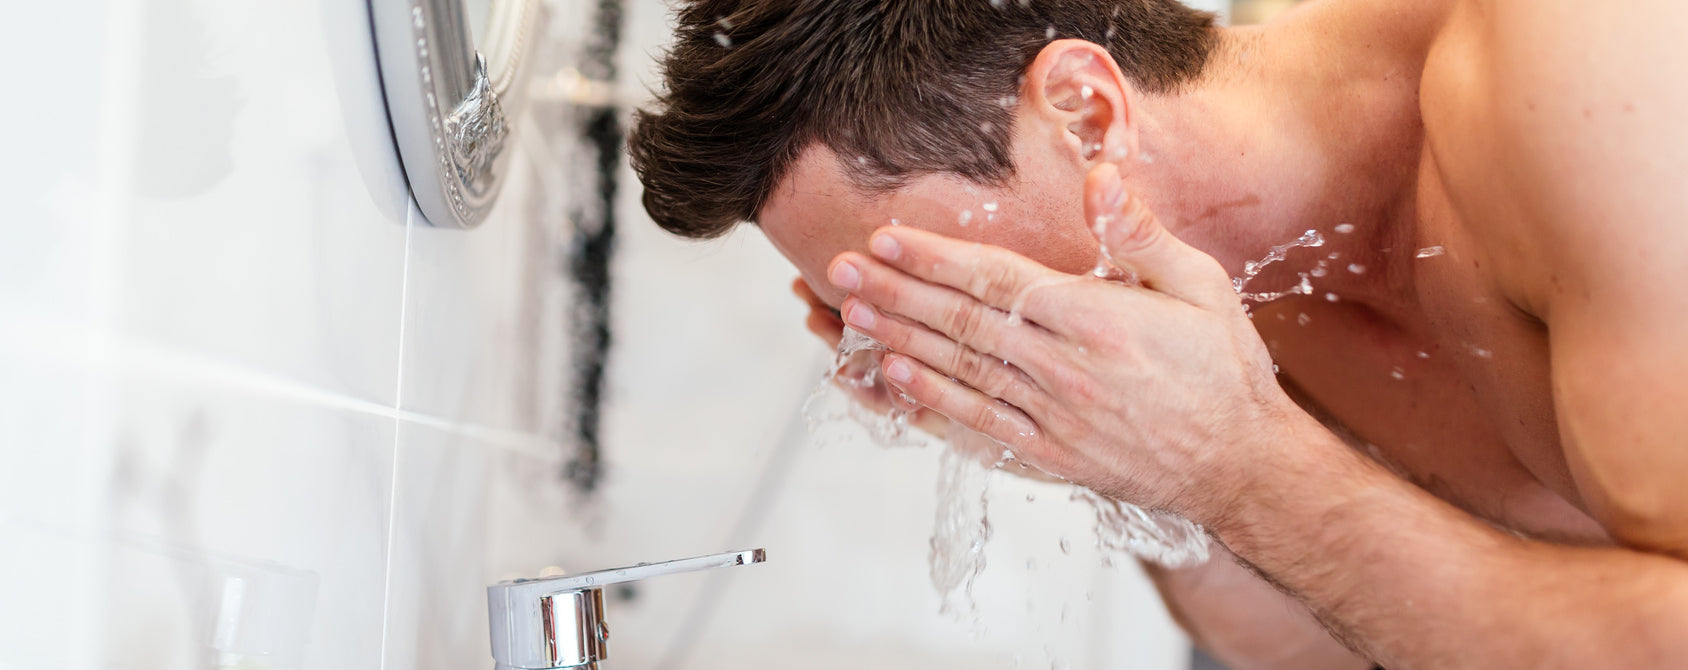 Men's Botanics Skincare - Man Washing Face with Men's Grooming Products